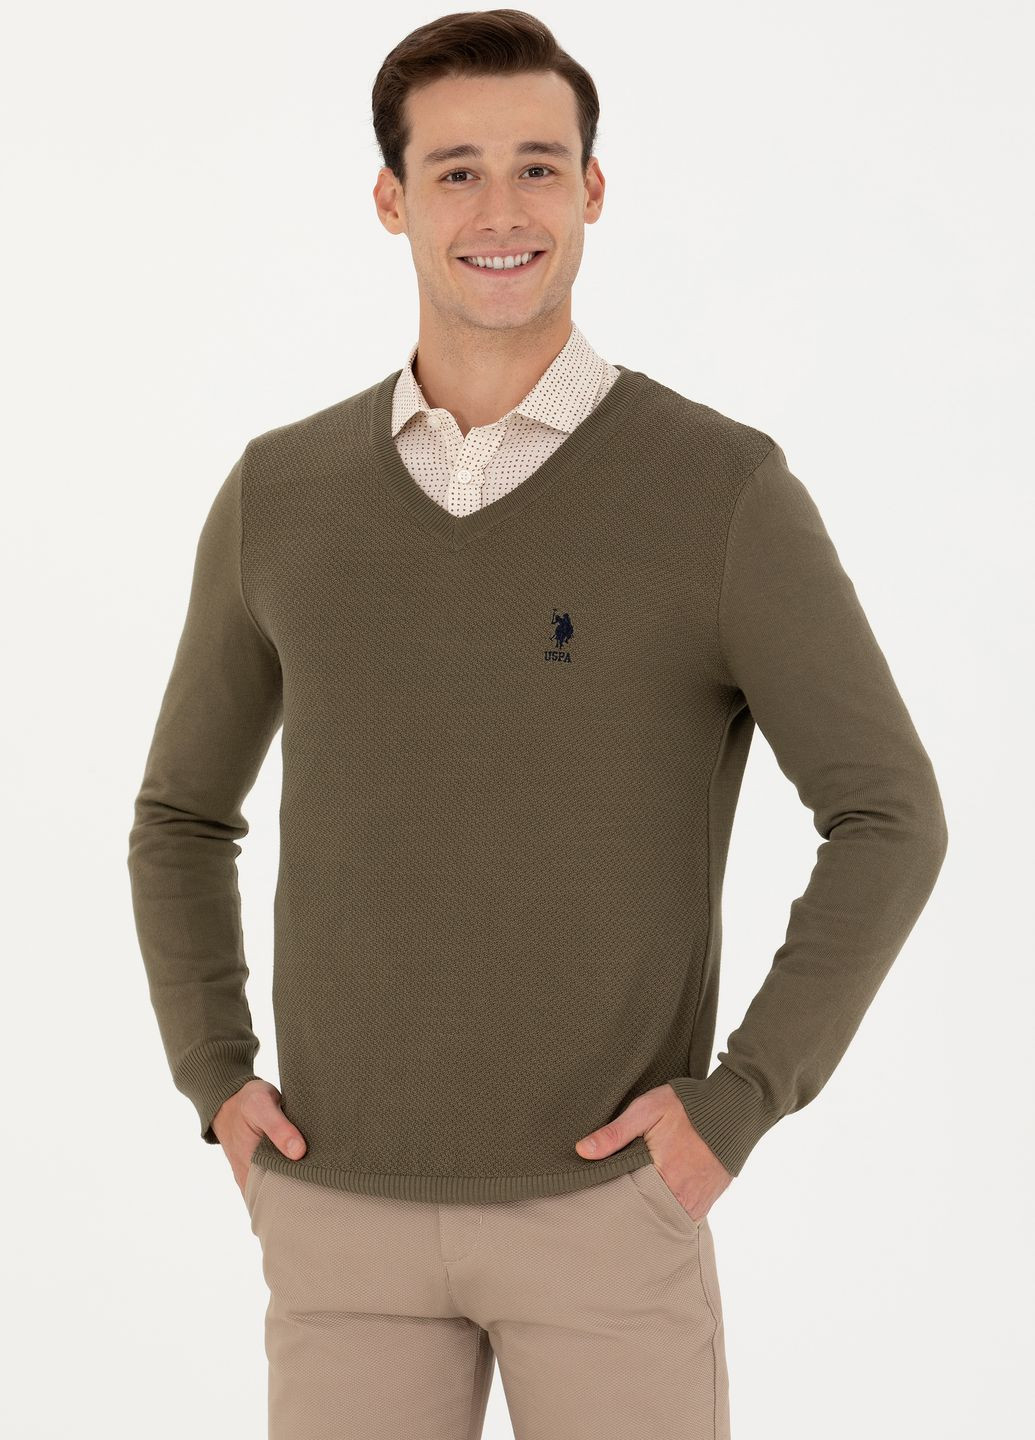 Оливковый (хаки) свитер мужской U.S. Polo Assn.